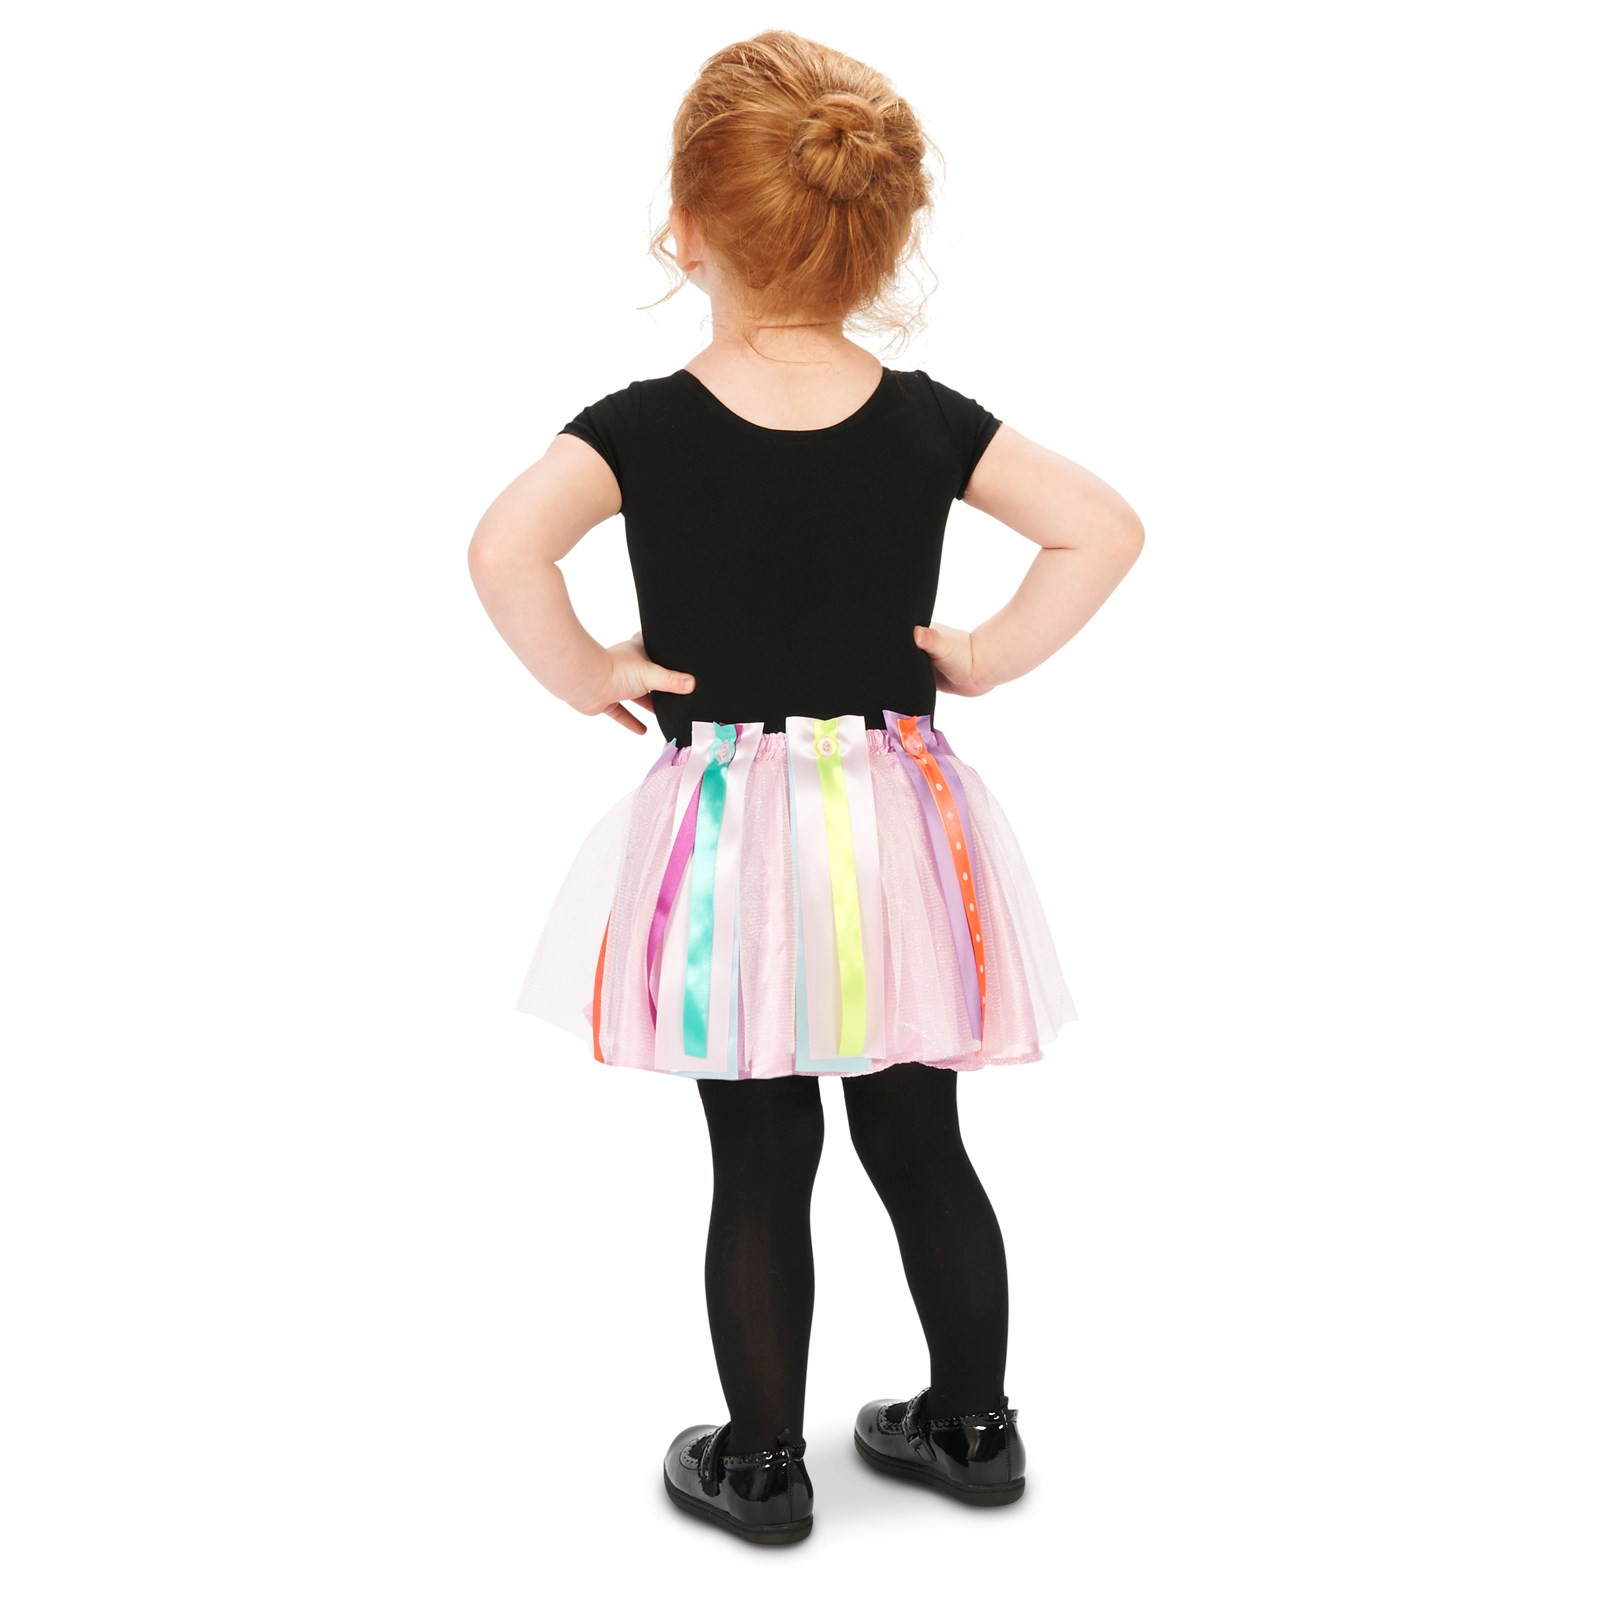 DIY Tutu Dress For Toddler
 Buy DIY Create Your Own Tutu Toddler Tutu Costume